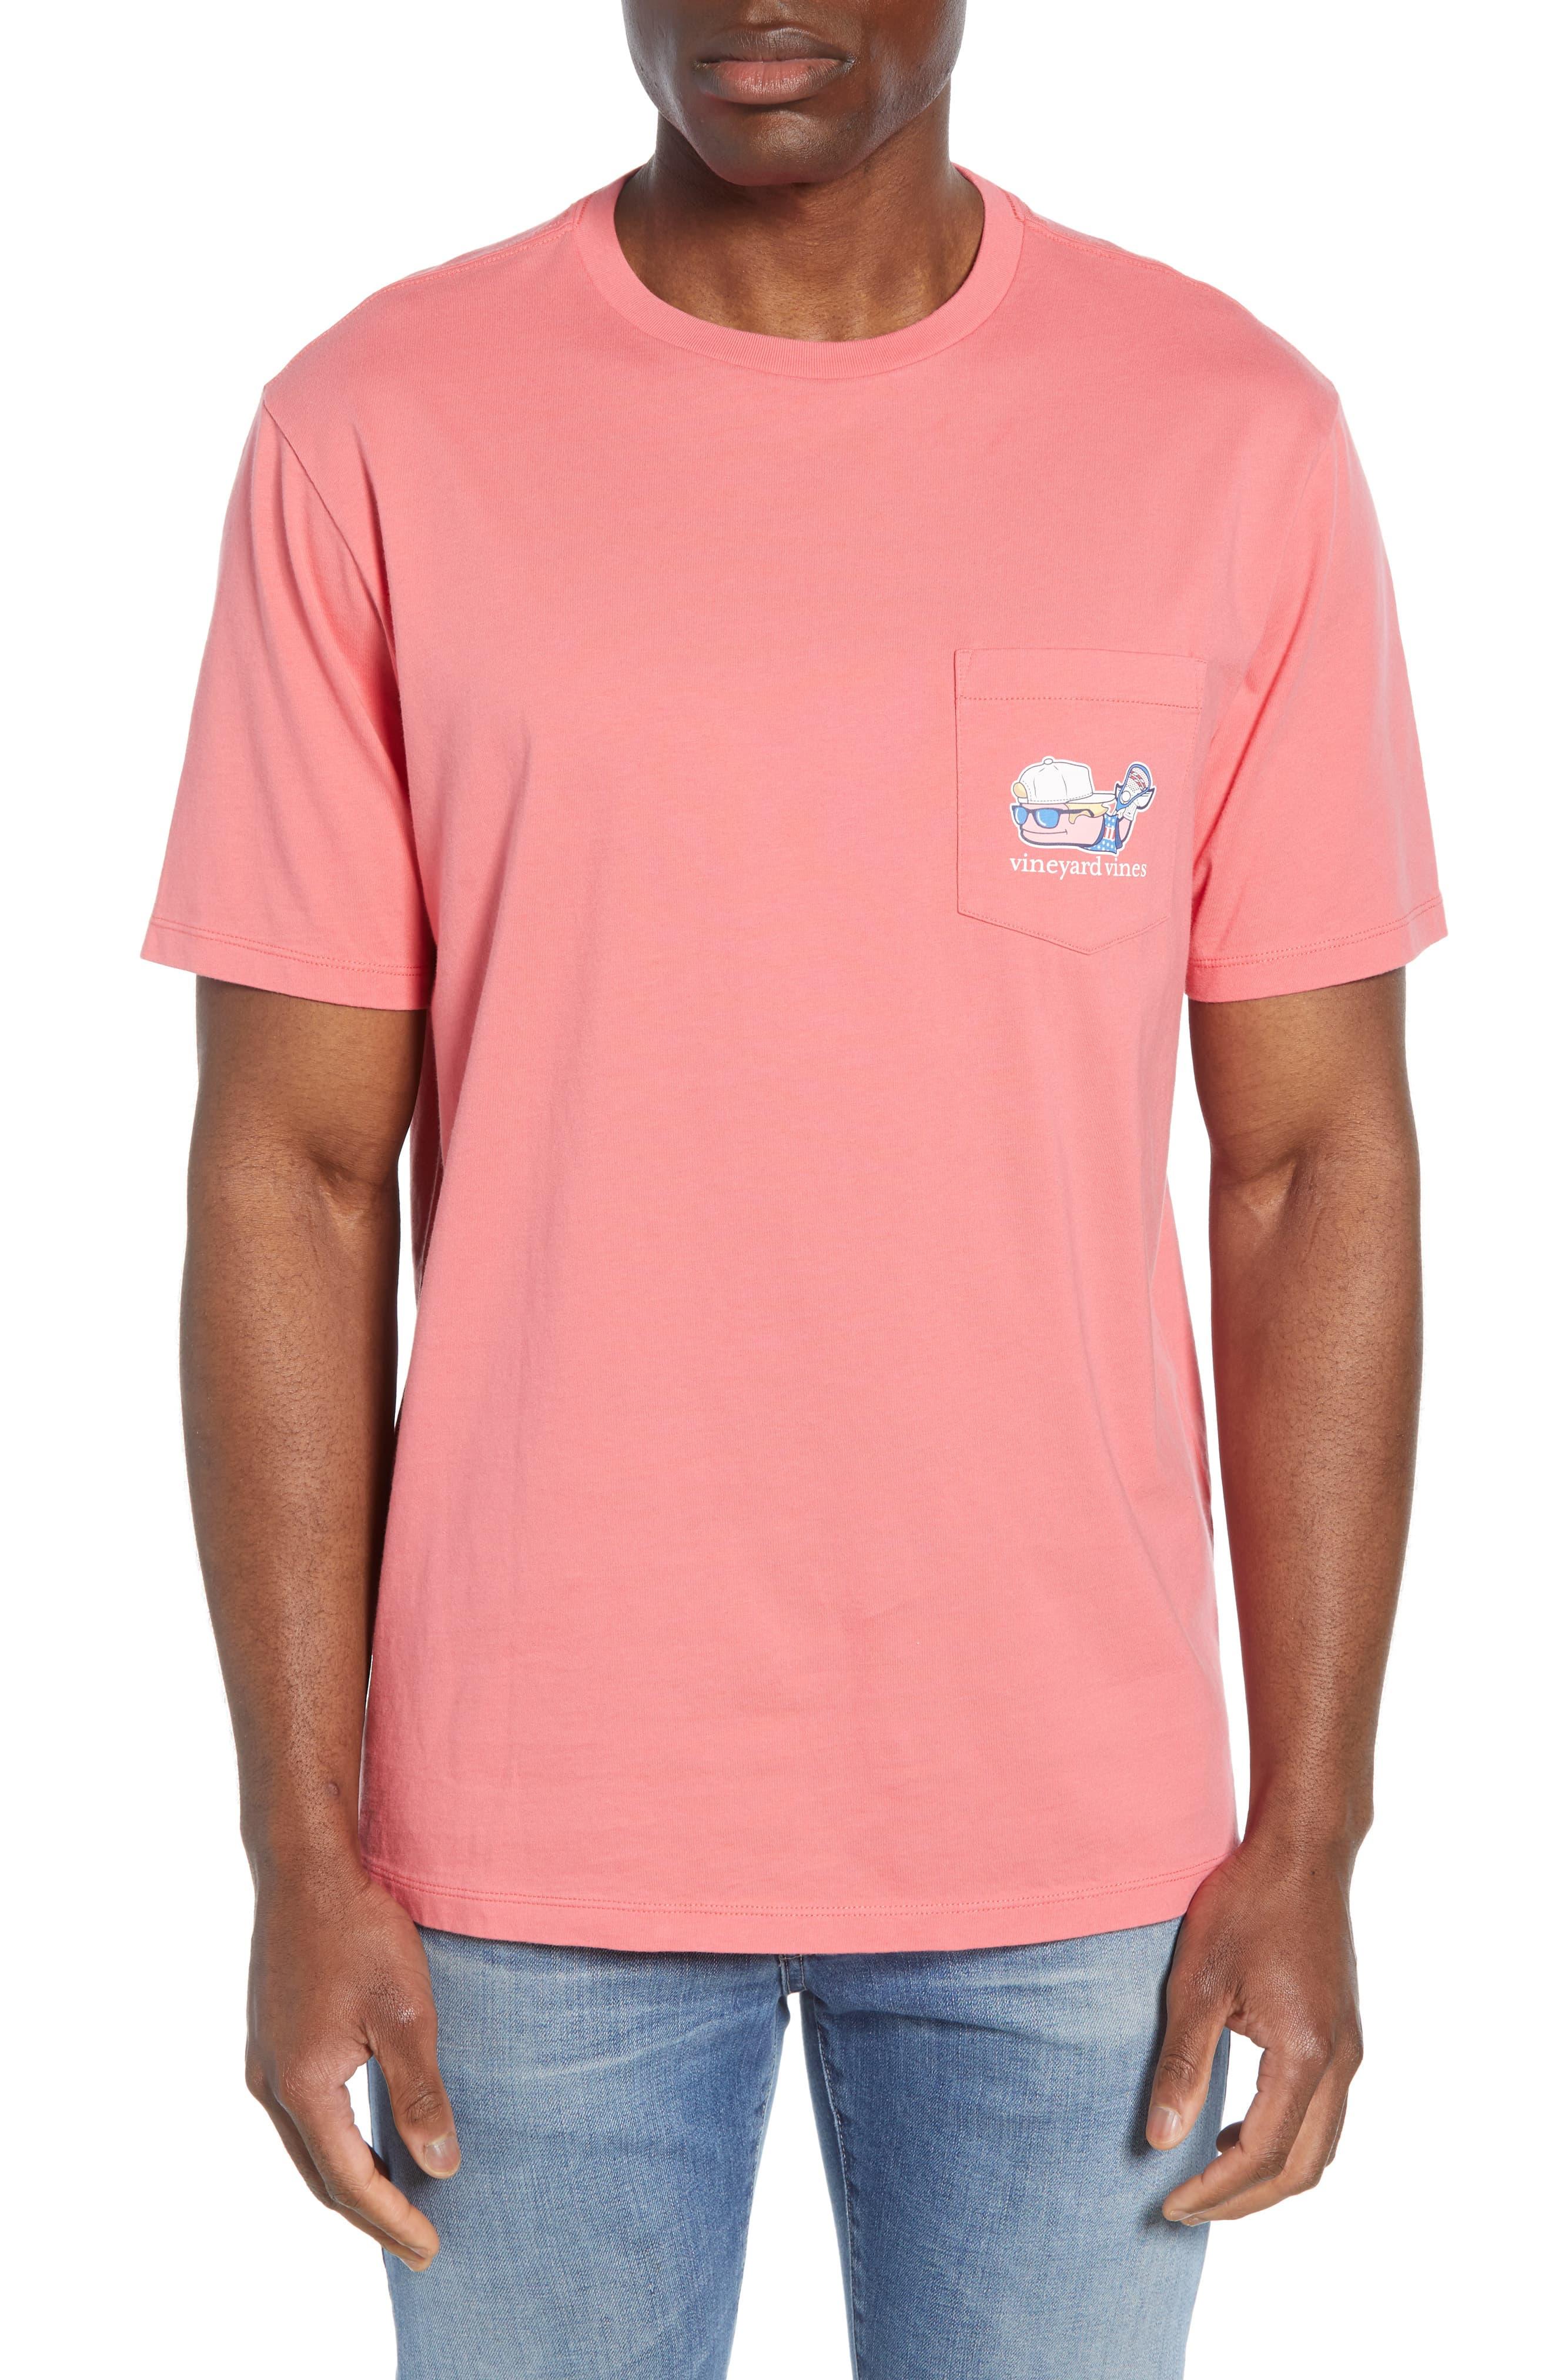 Vineyard Vines Lacrosse Whale Pocket T-shirt in Pink for Men - Lyst